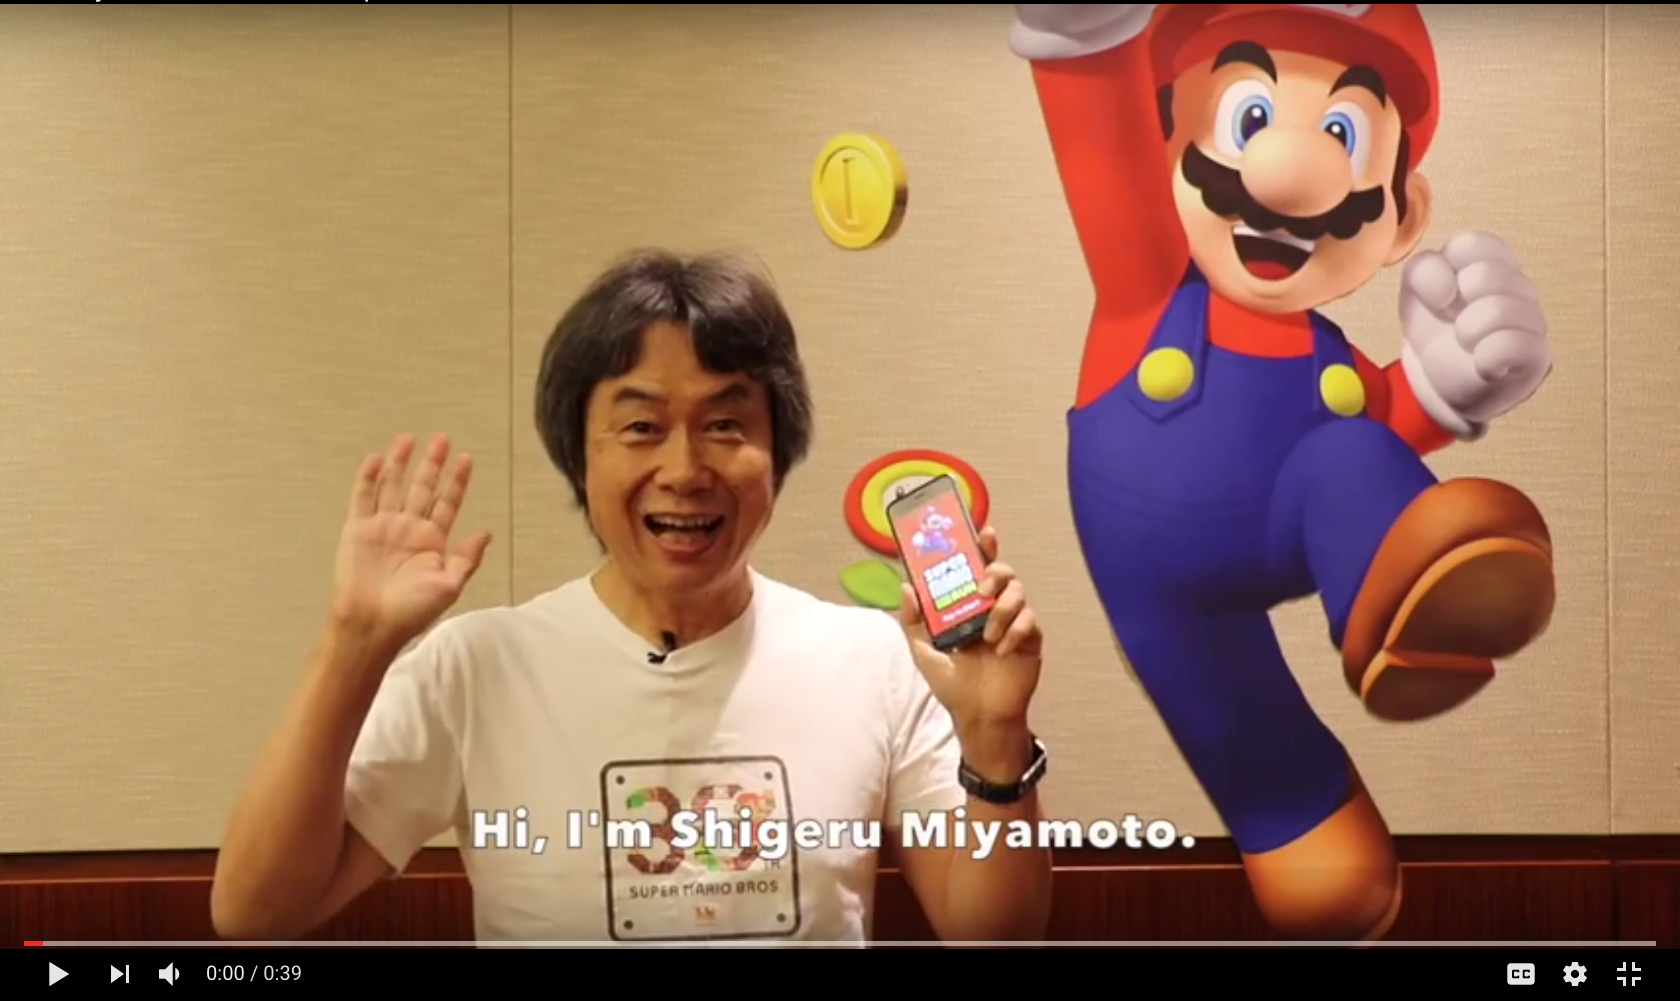 Super Mario Run' Made by Shigeru Miyamoto, Original Mario Creators